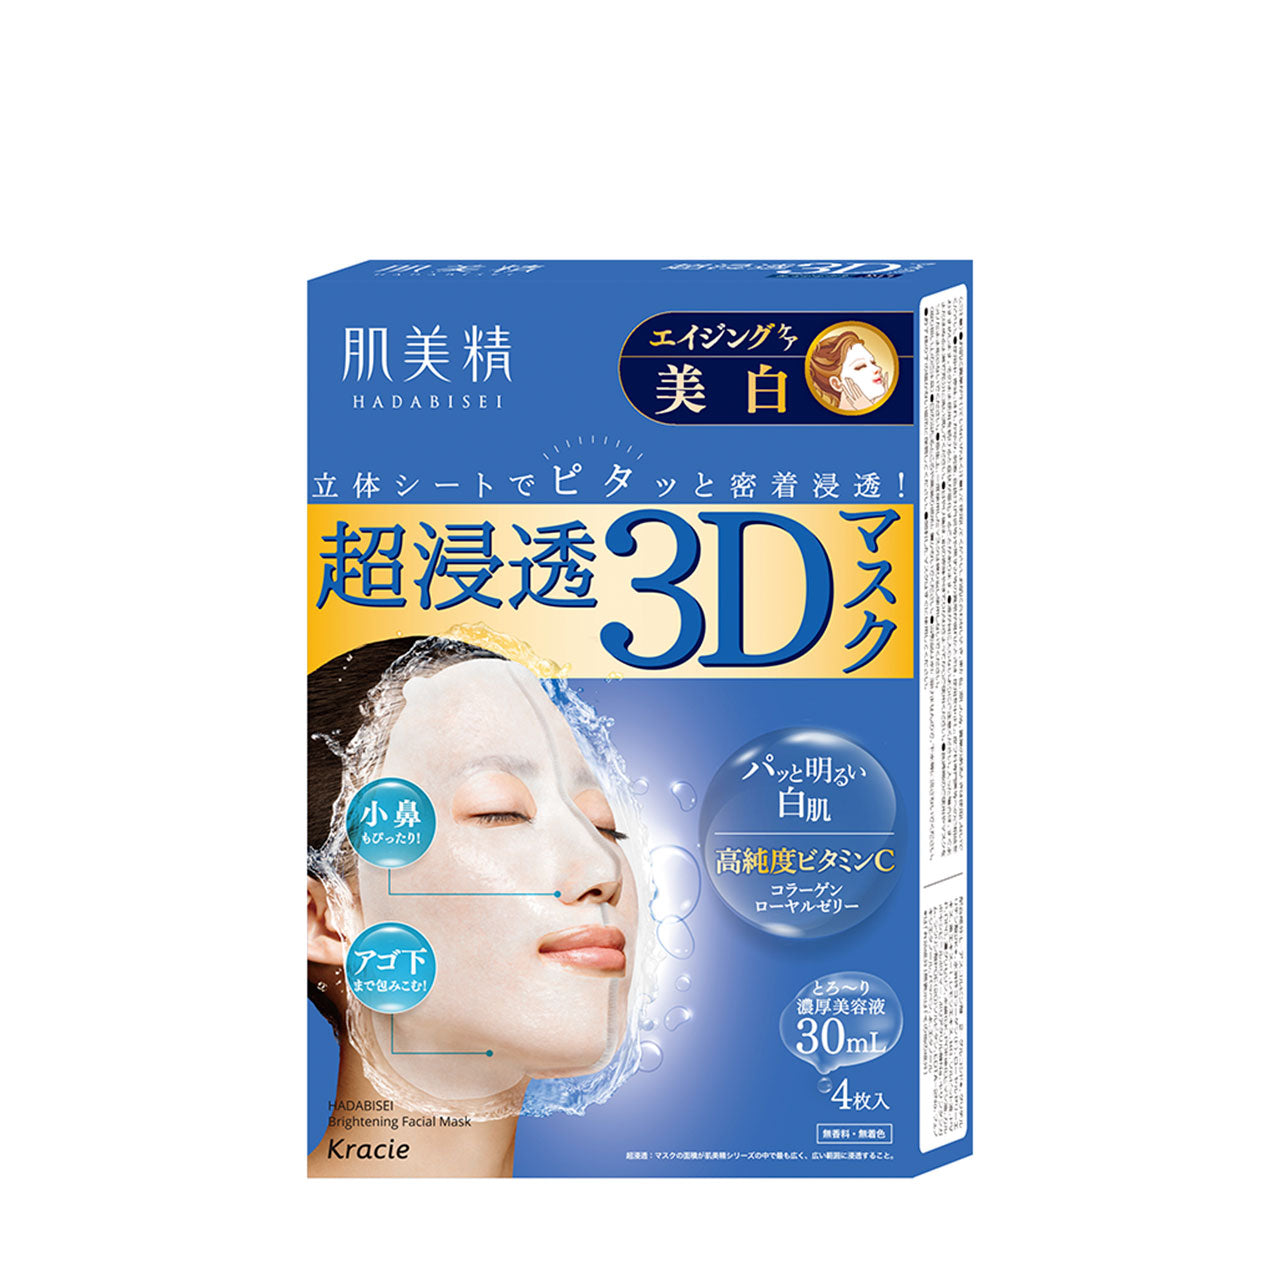 KRACIE Hadabisei 3D Face Mask (Aging-care Brightening) 4piece   KRACIE 肌美精超滲透3D美白立體面膜 (4片裝)